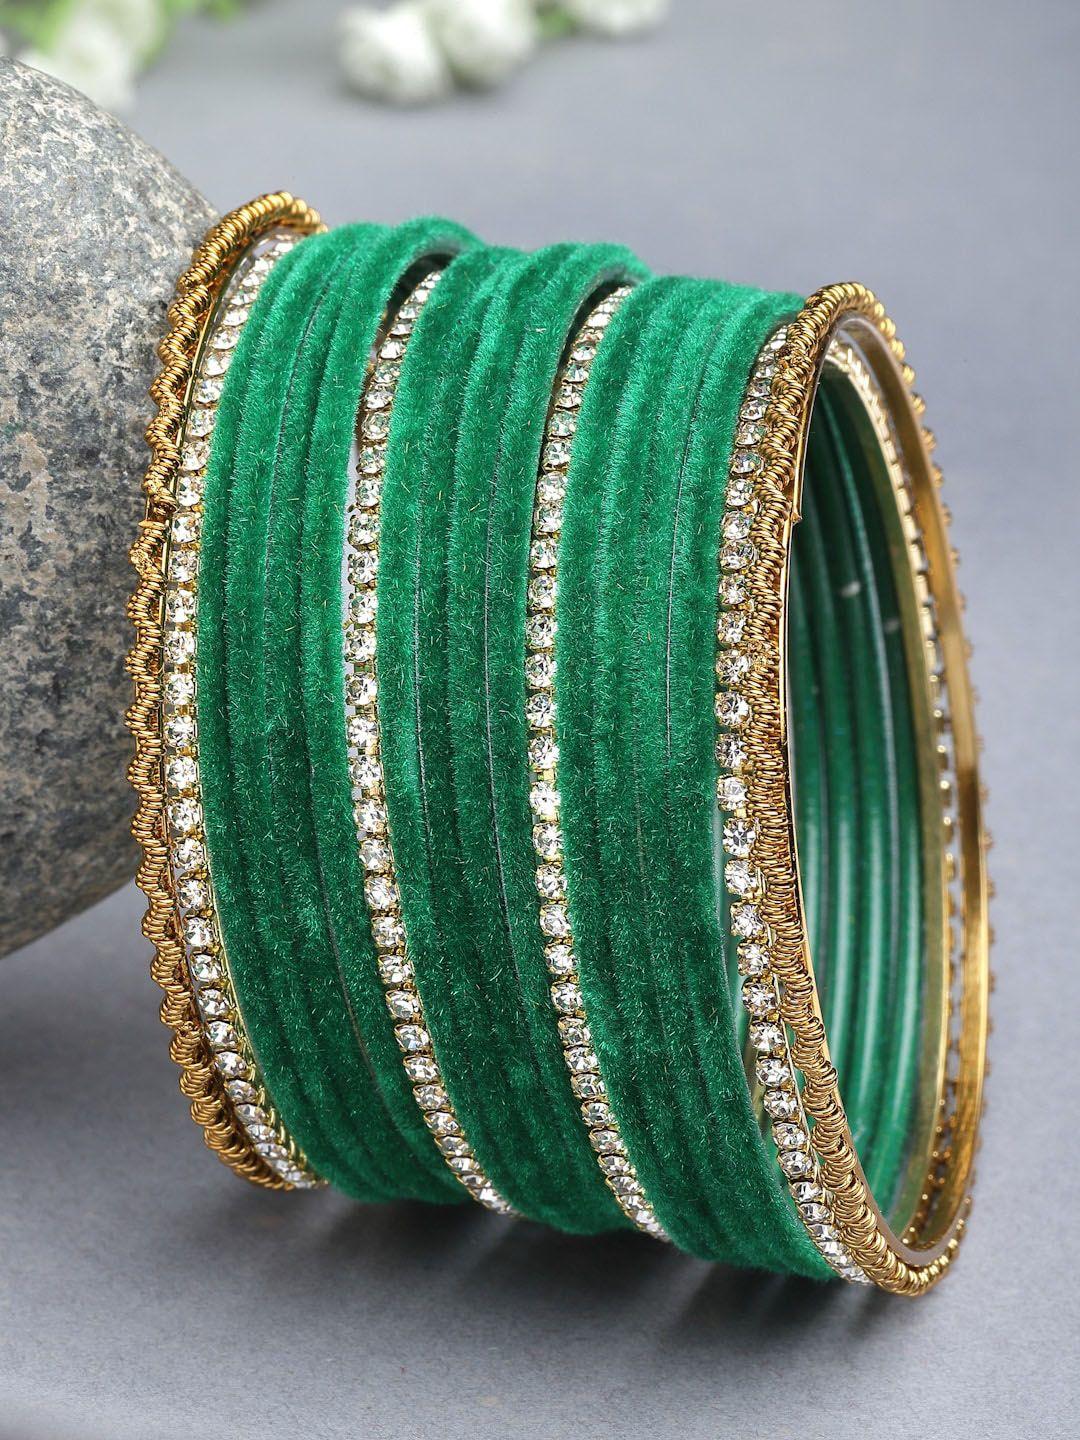 zeneme set of 18 gold-plated cz studded bangles